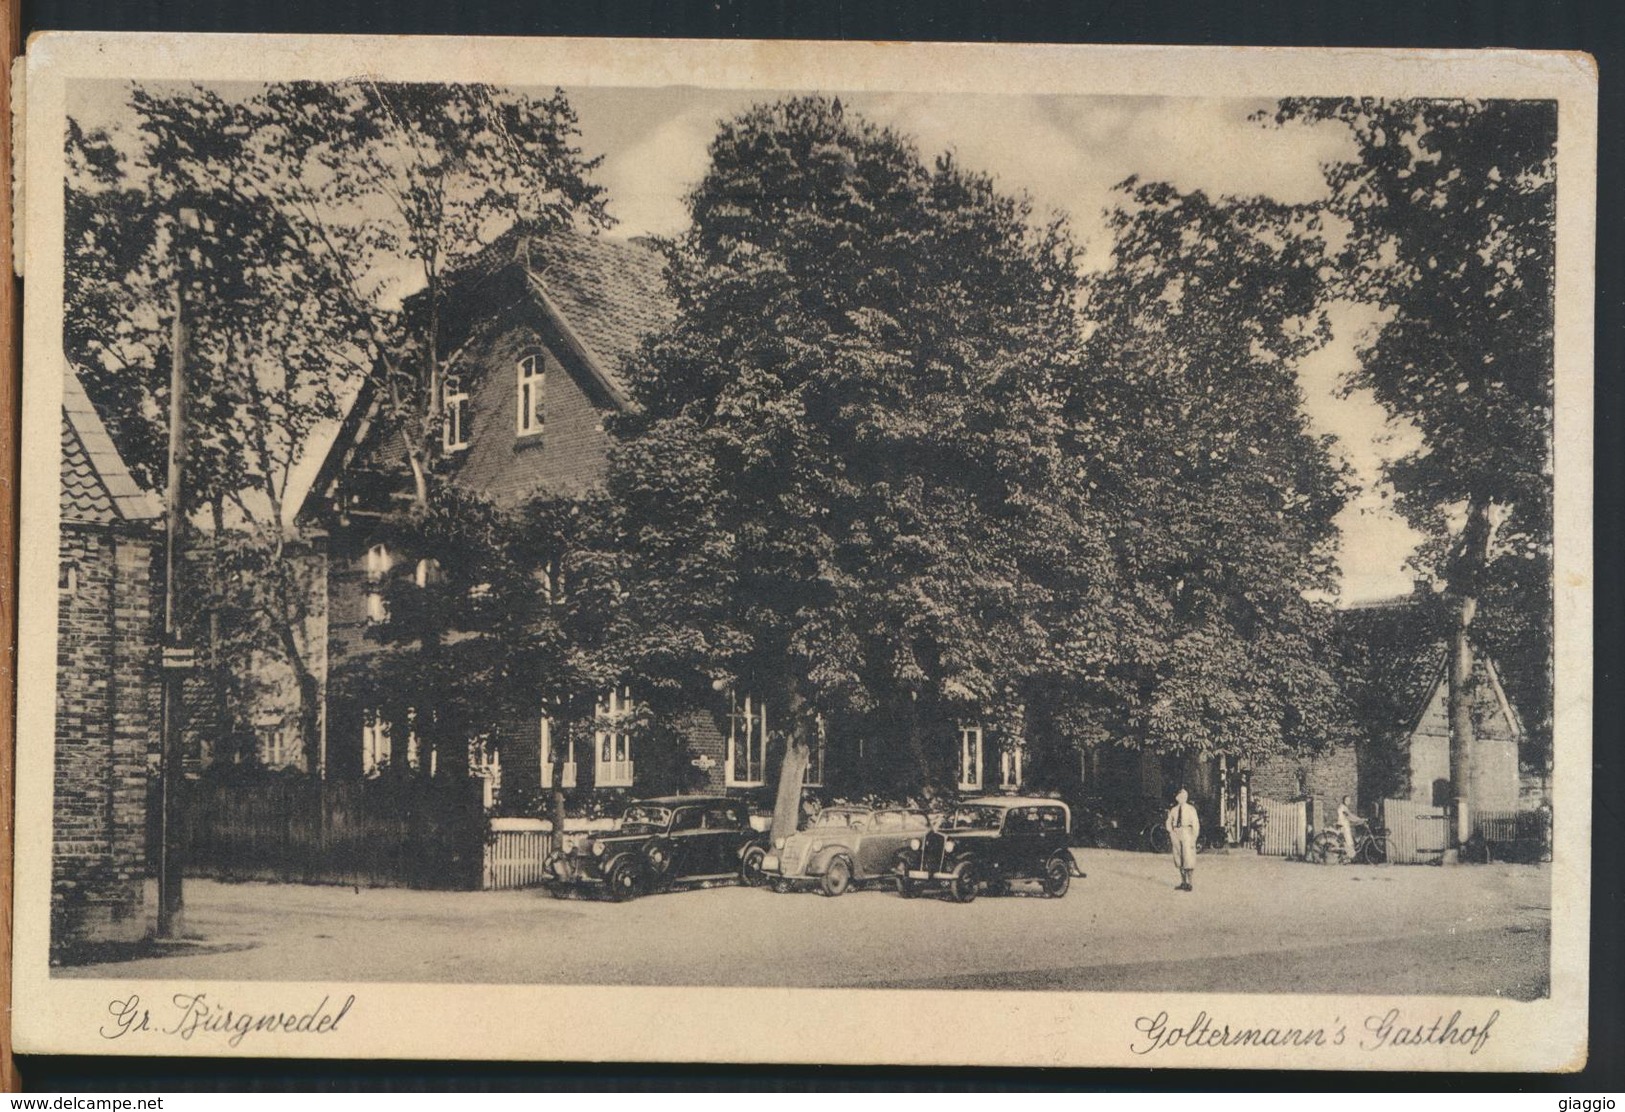 °°° 11176 - BURGWEDEL - GOLTERMANN'S GASTHOF - 1917 With Stamps °°° - Burgwedel